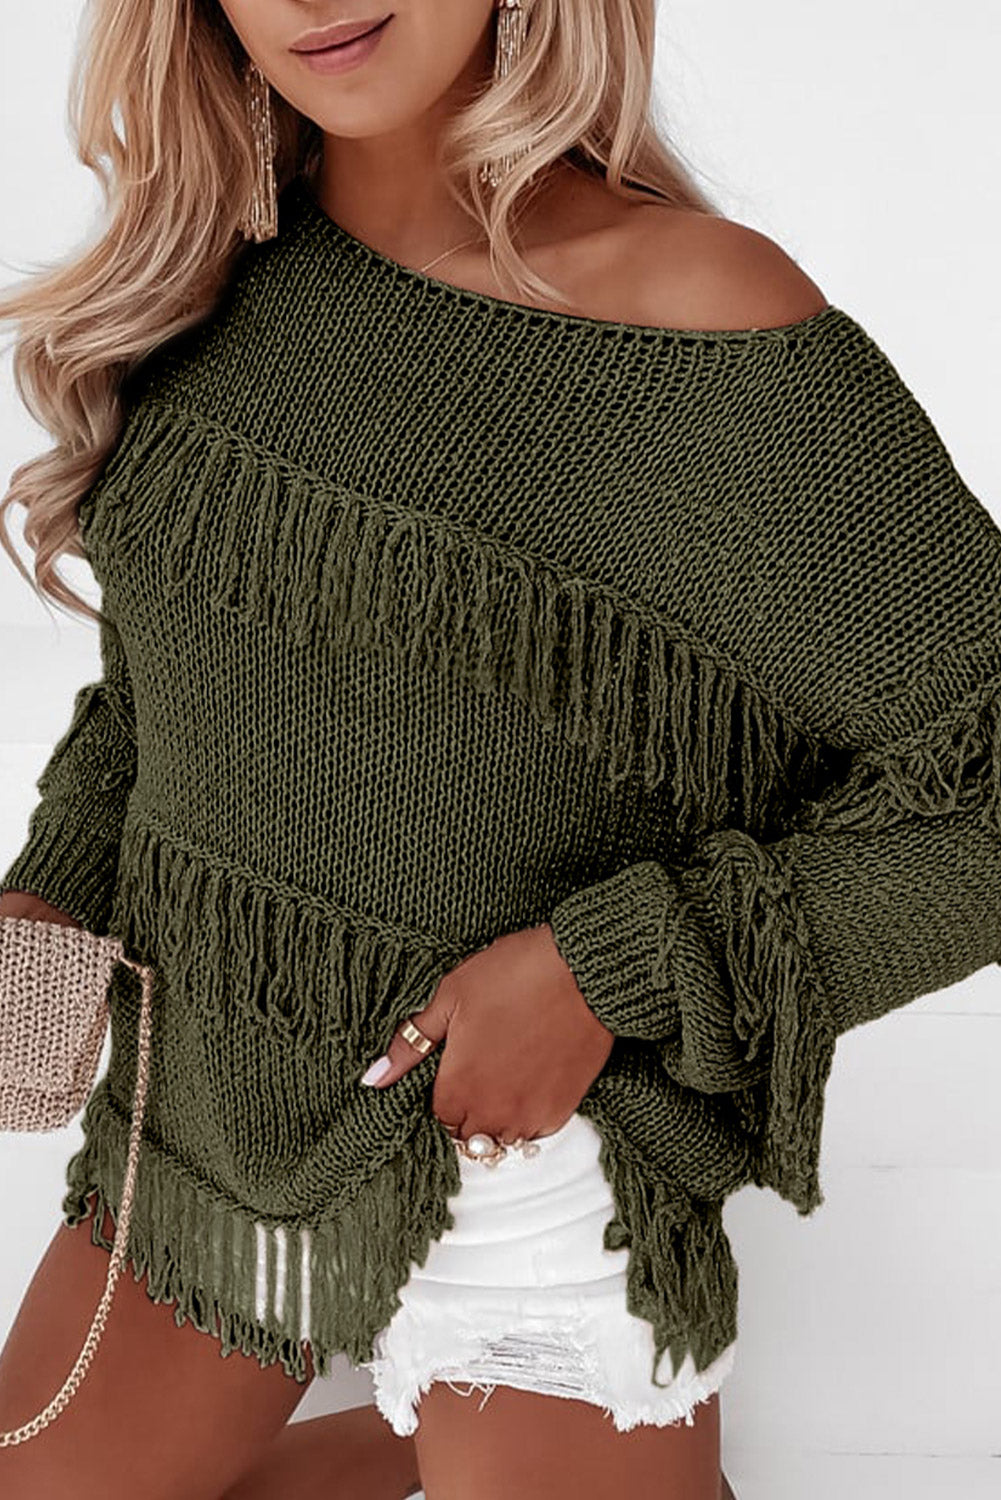 Boho Tasseled Knitted Sweater